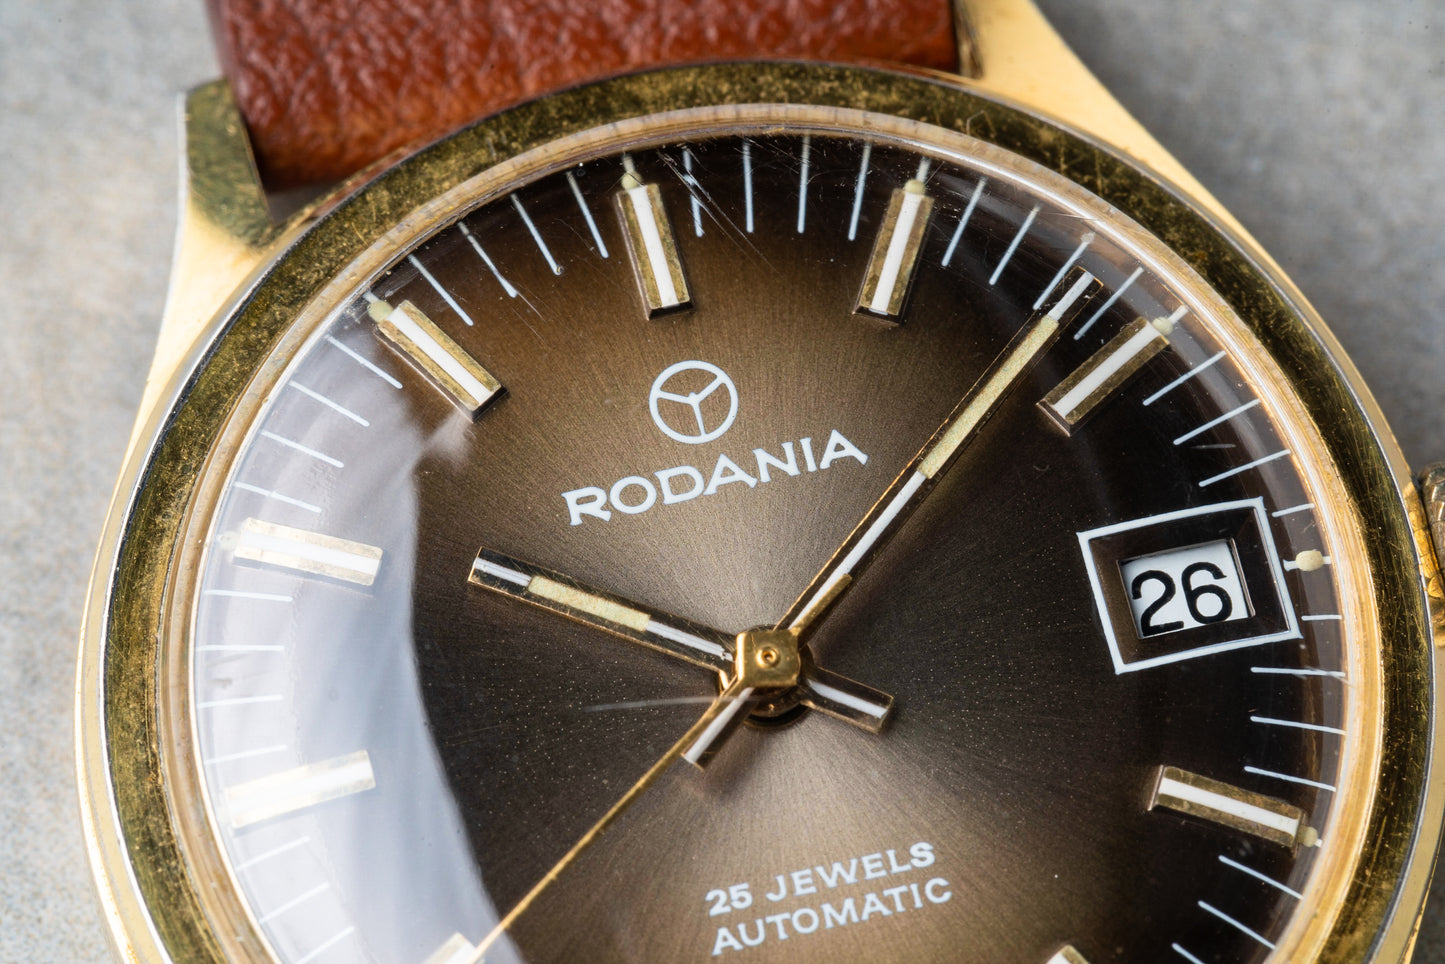 Rodania Automatic Date